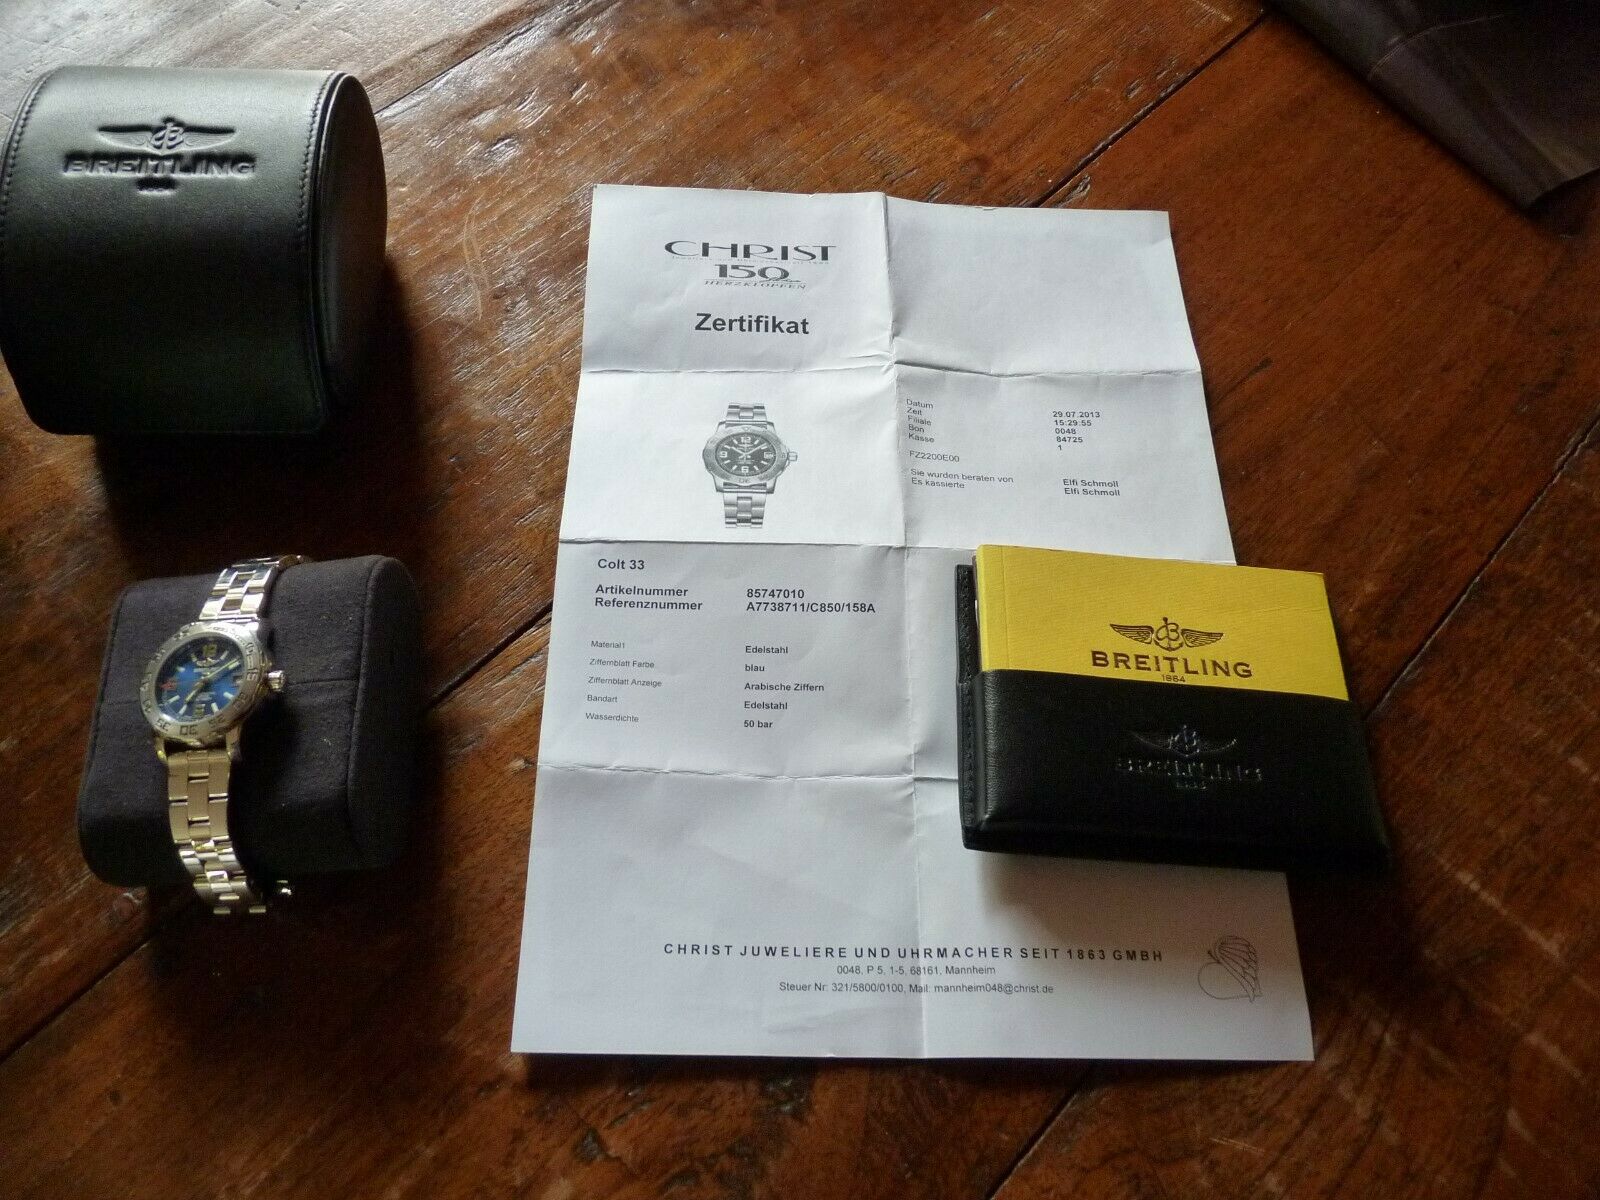 Breitling Colt 33 A7738711 C850 158a Stahl Uhr Watchcharts